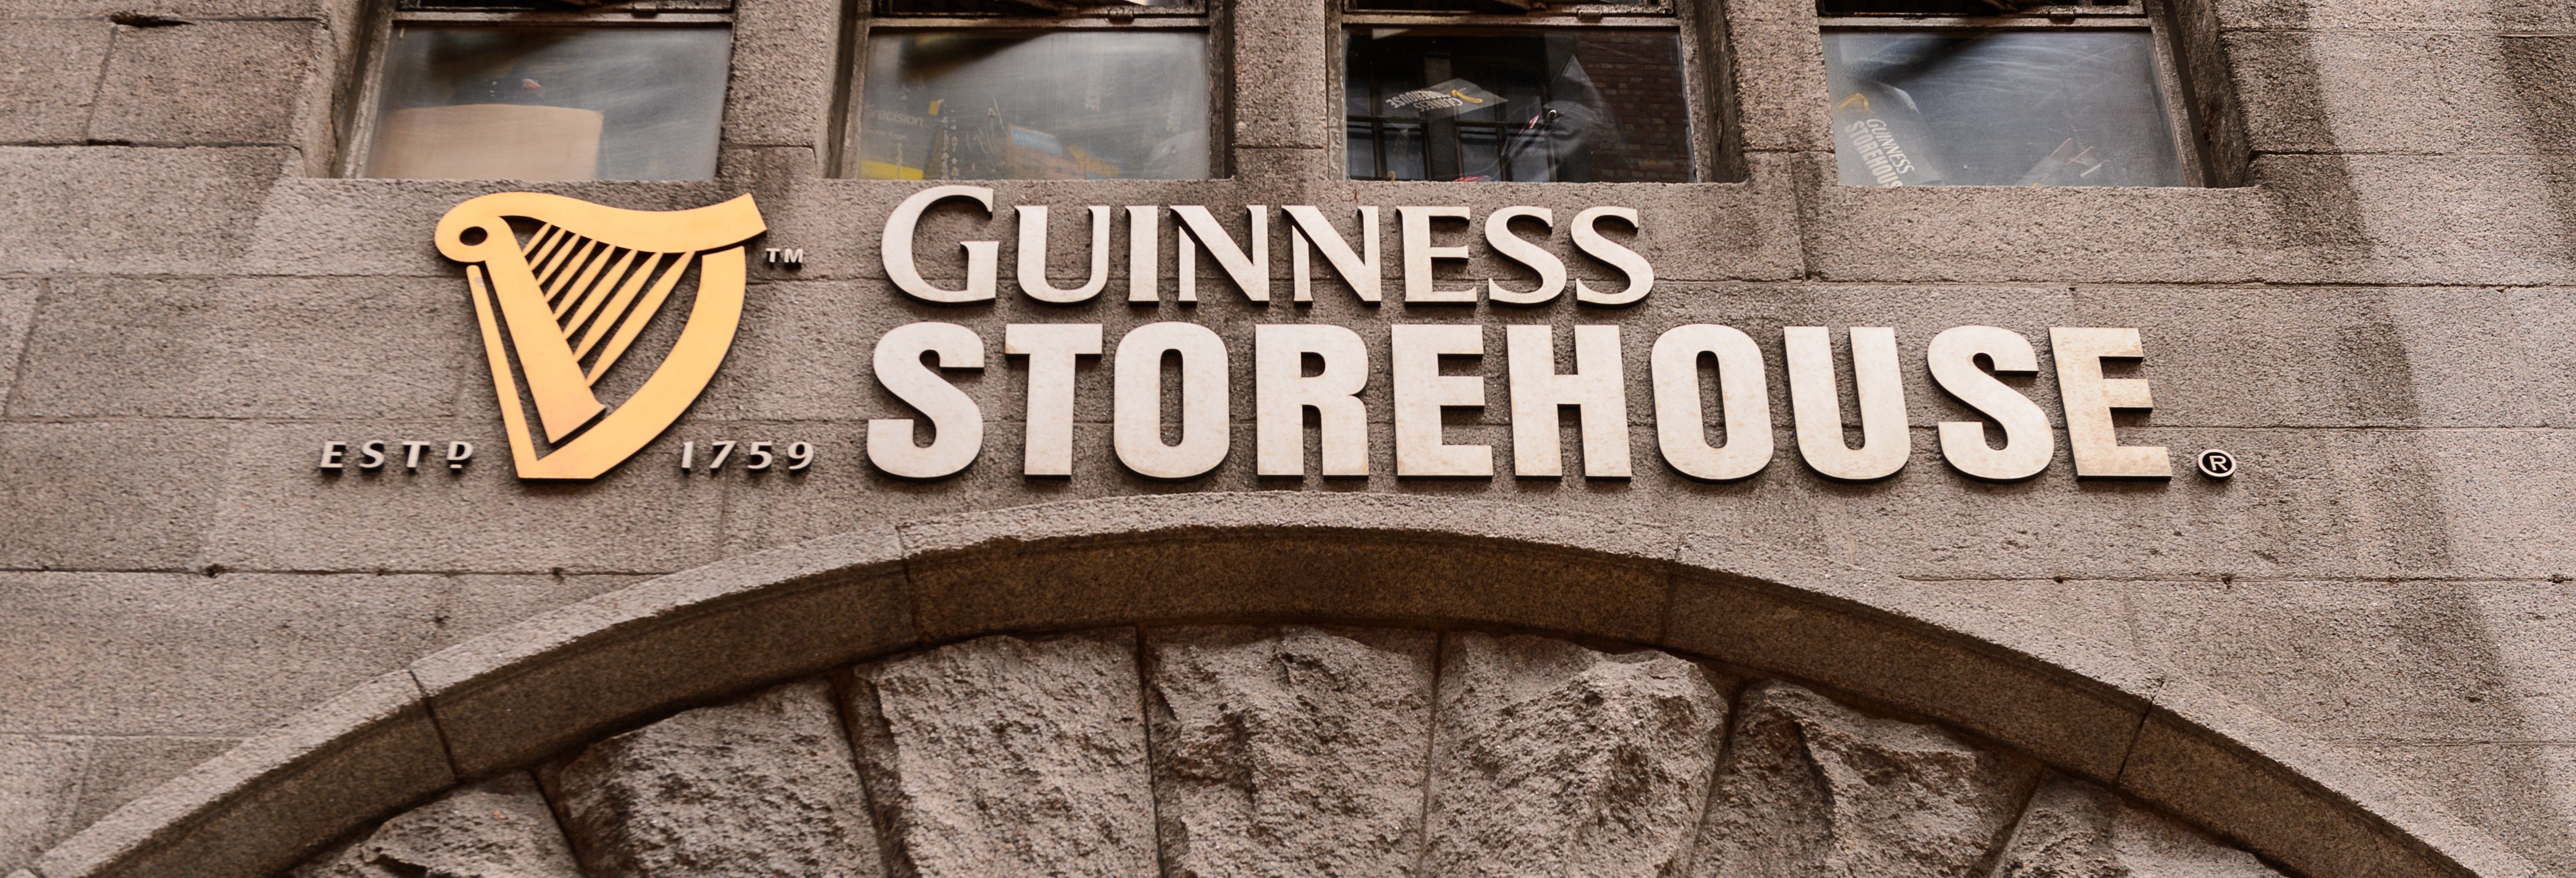 Visita guiada por la Guinness Storehouse